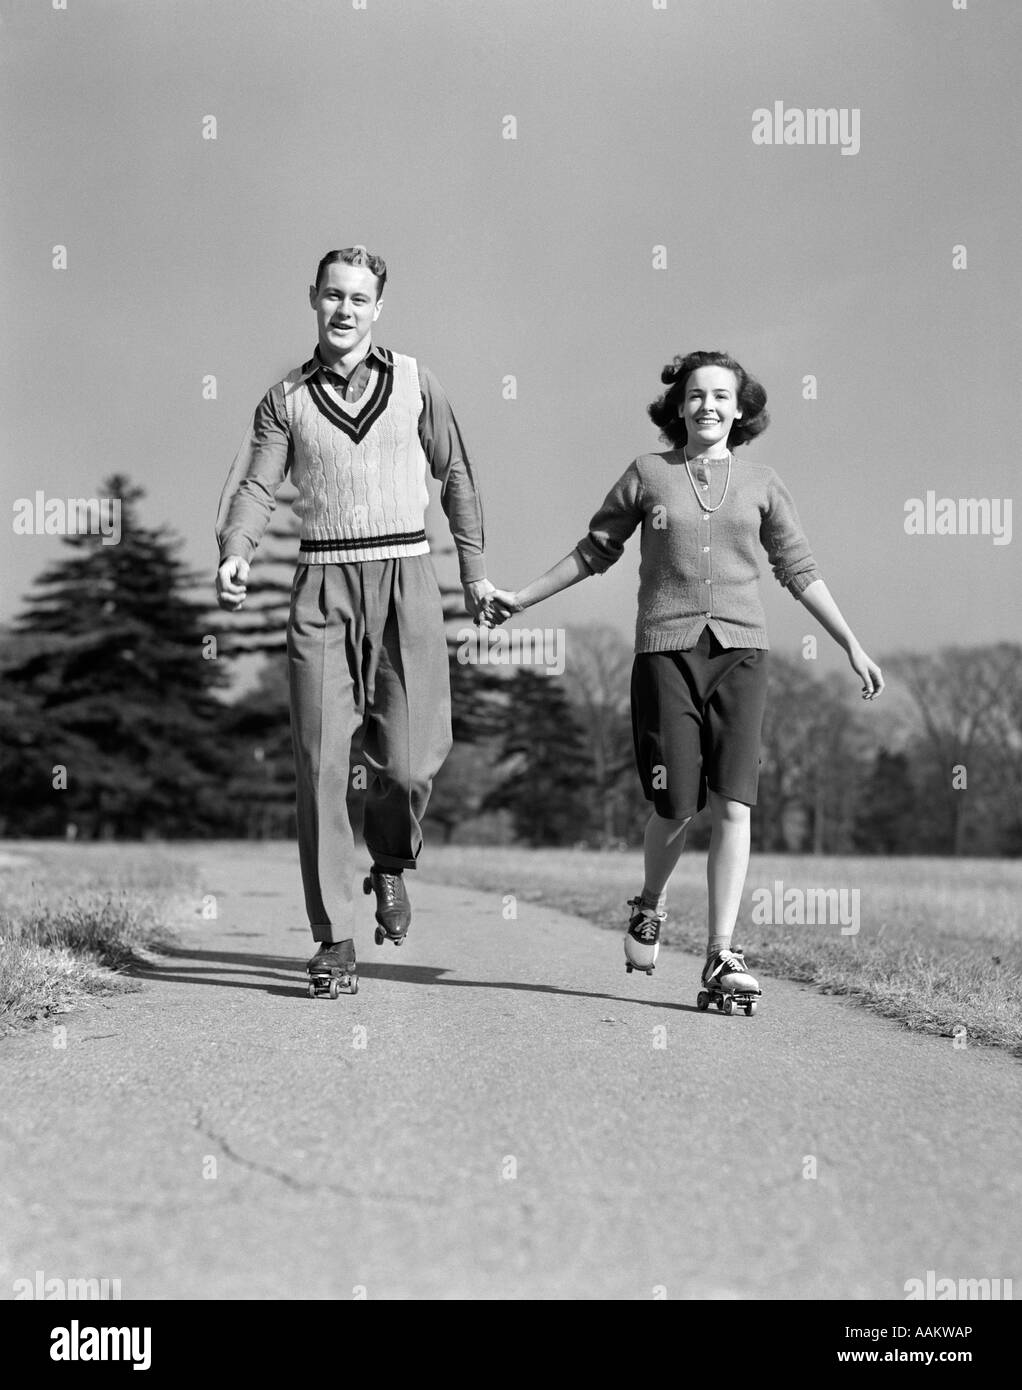 1940s SMILING TEENAGE COUPLE BOY GIRL HOLDING HANDS ROLLER SKATING ON SIDEWALK Stock Photo